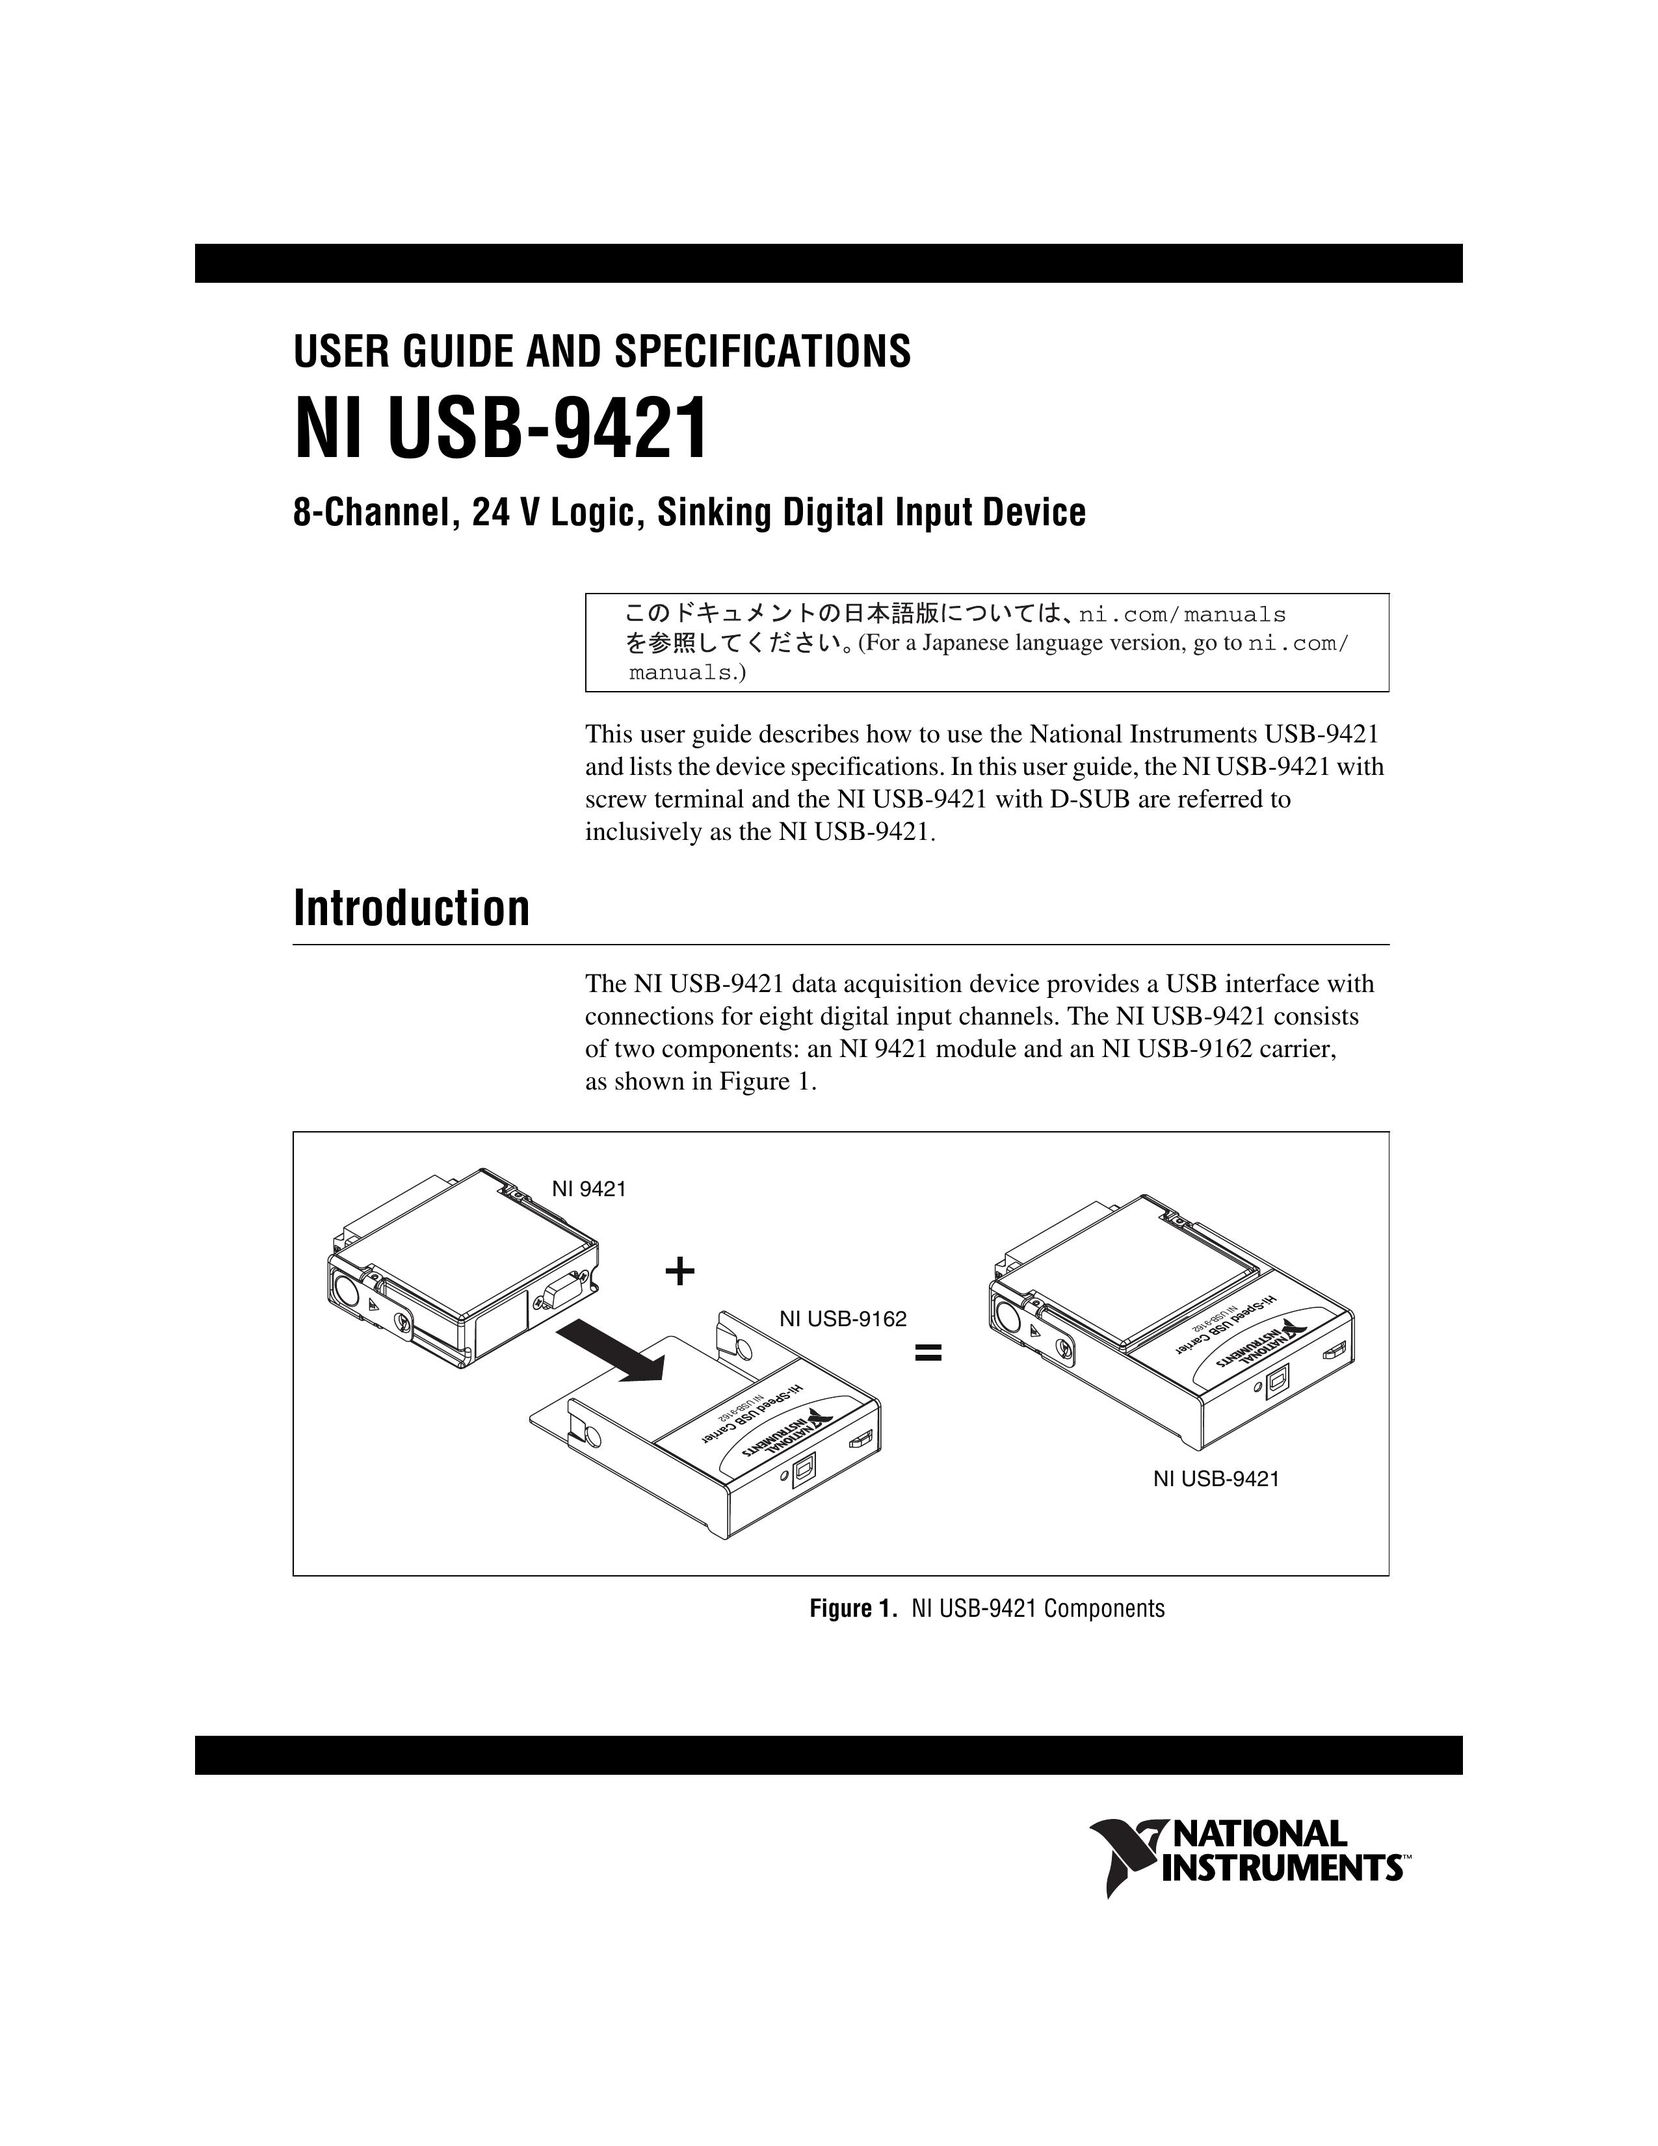 National Instruments 8-Channel, 24 V Logic, Sinking Digital Input Device Computer Hardware User Manual